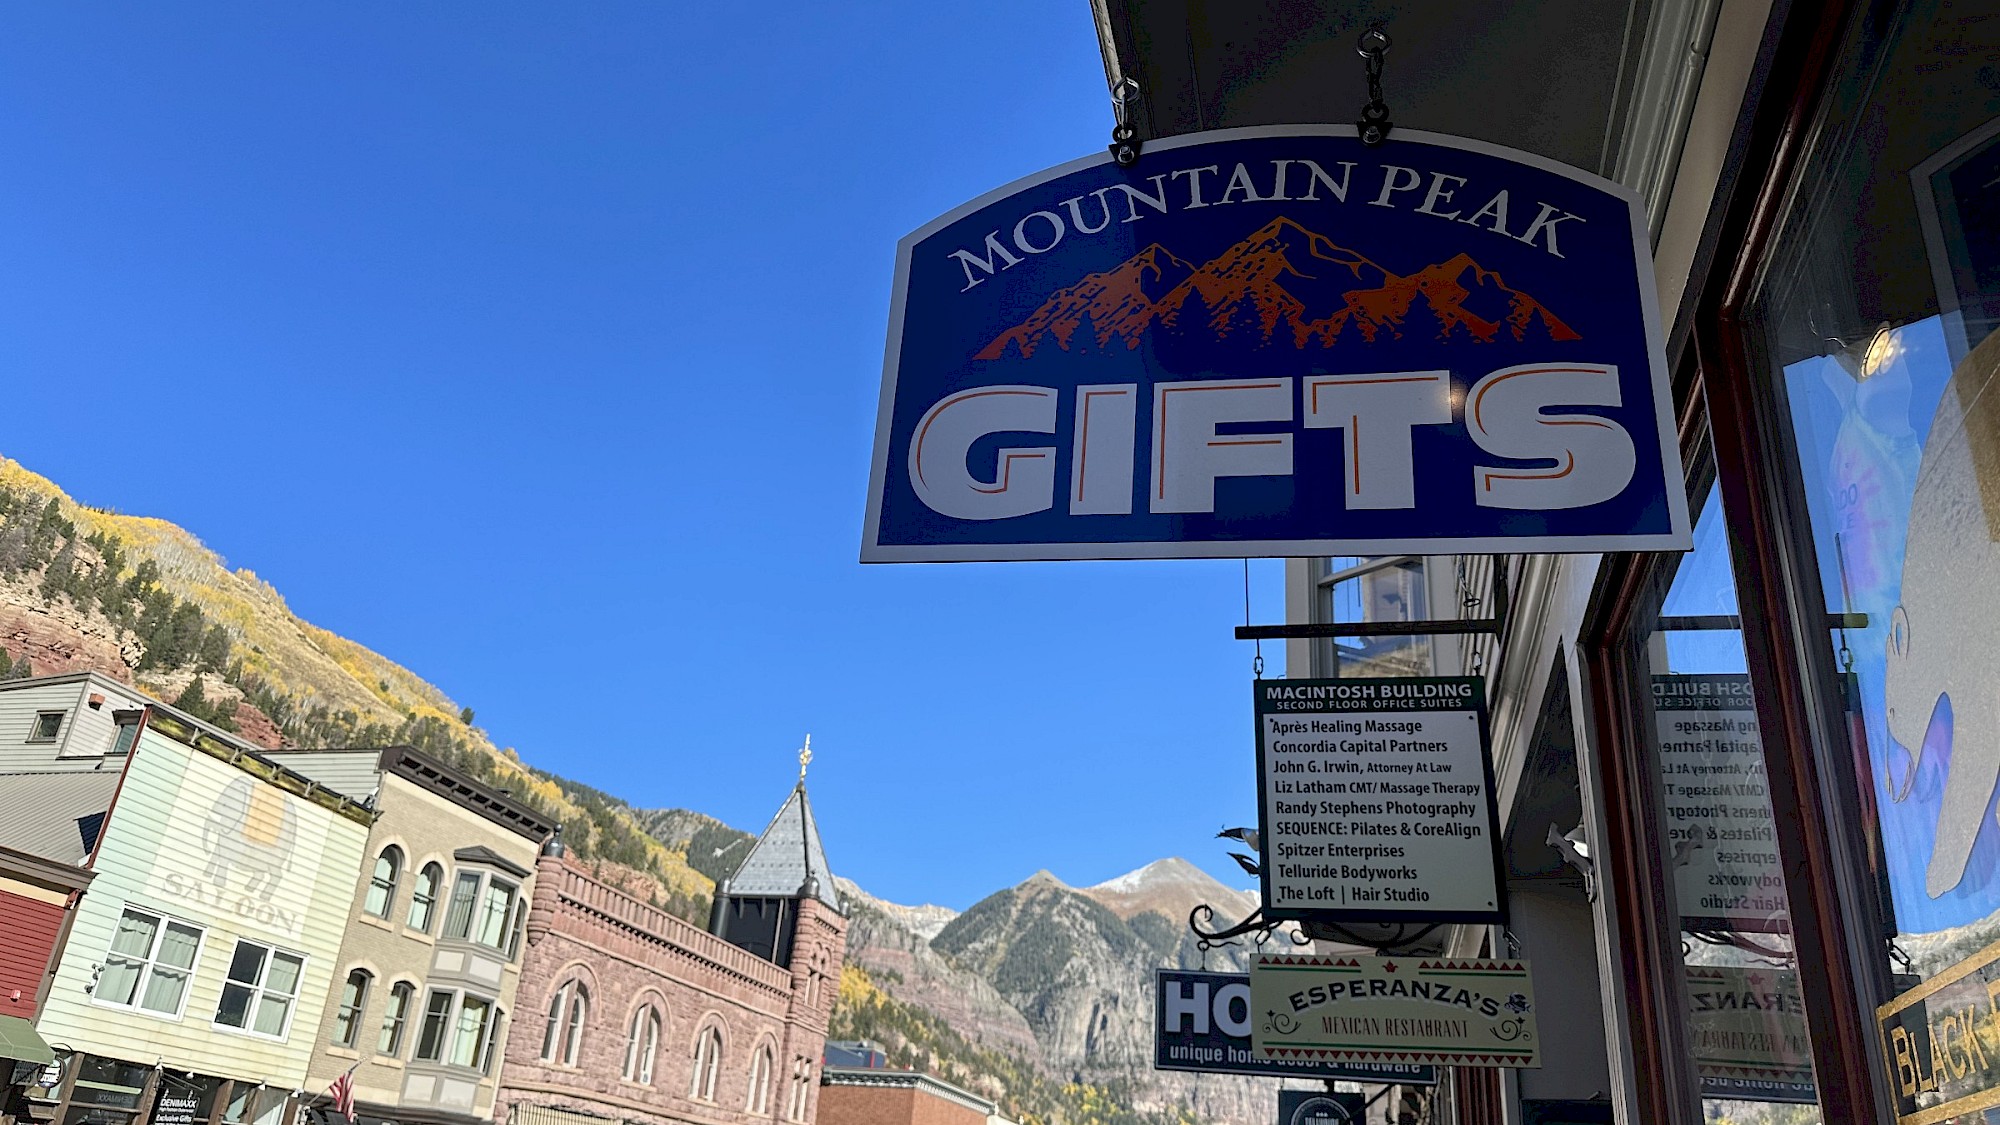 Mountain Peak Gifts